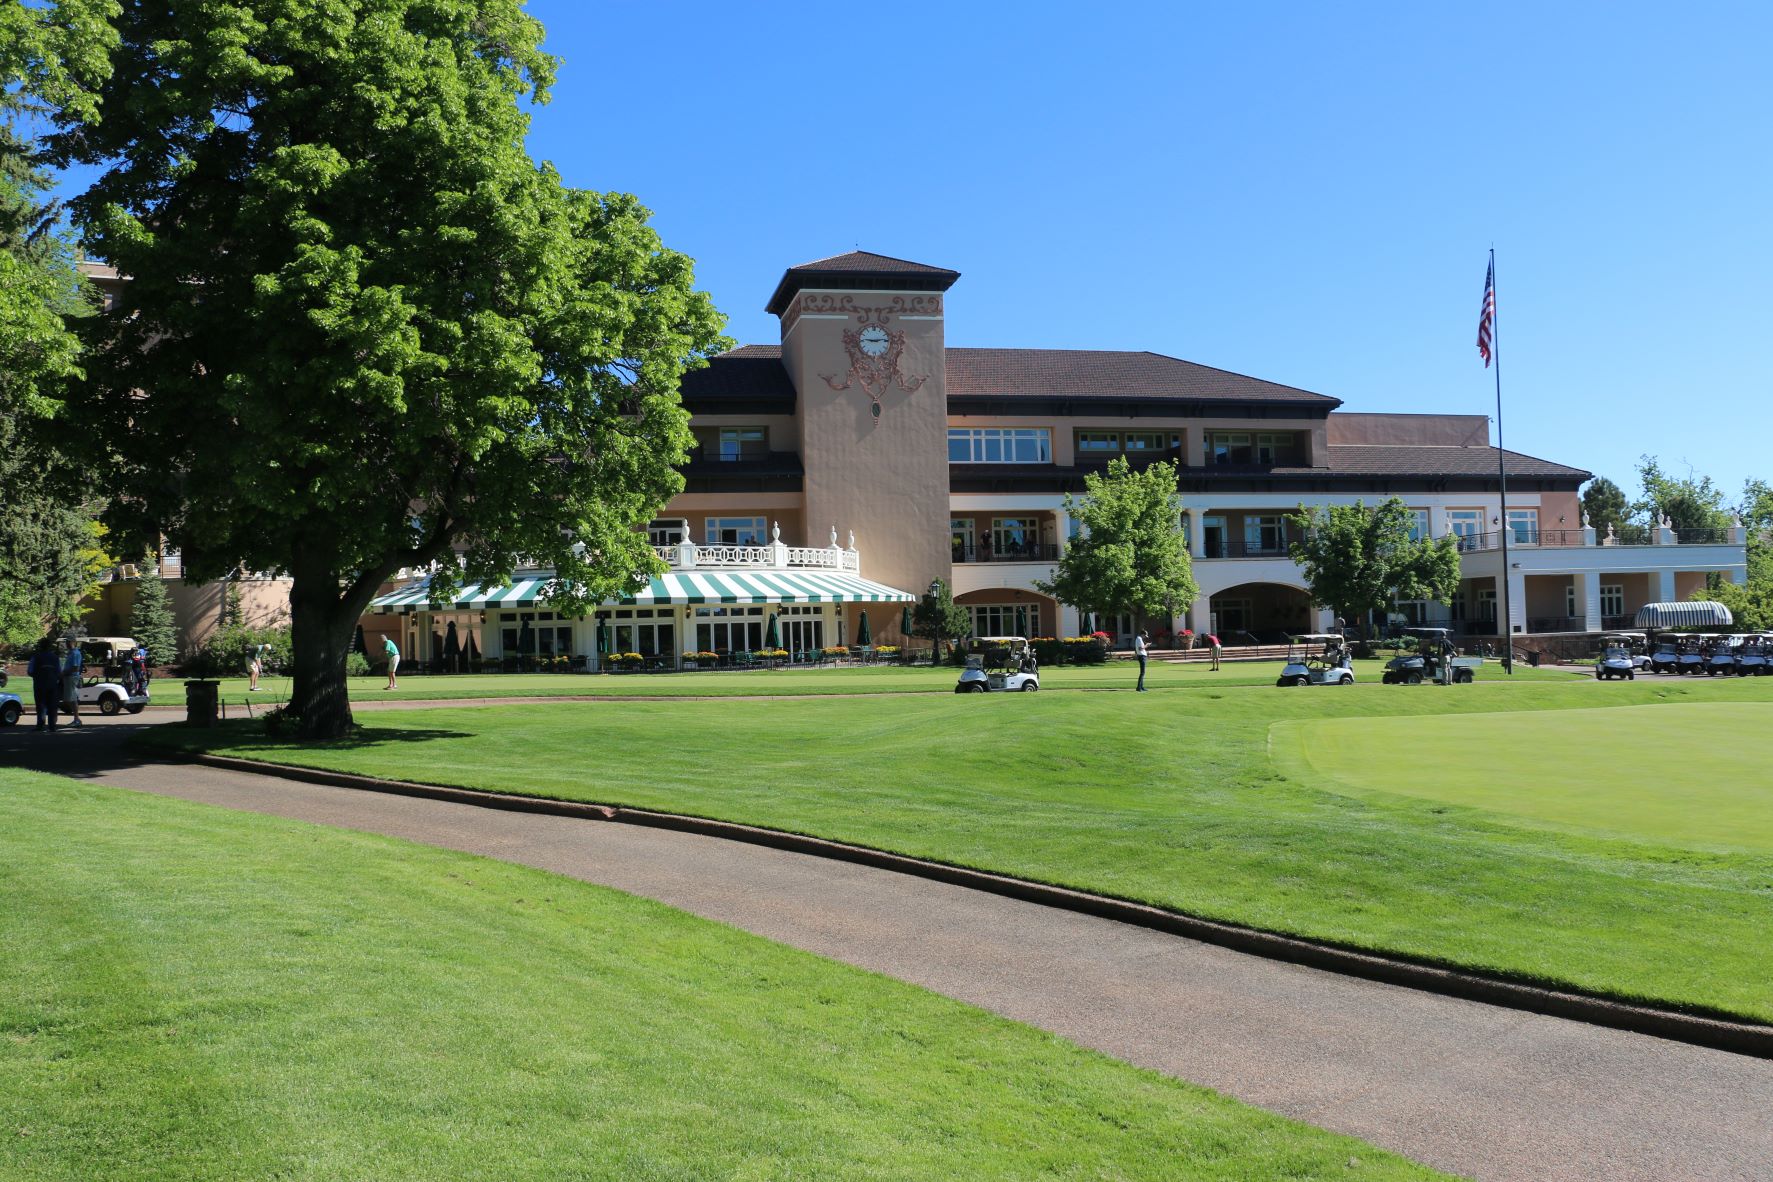 The Broadmoor golf course